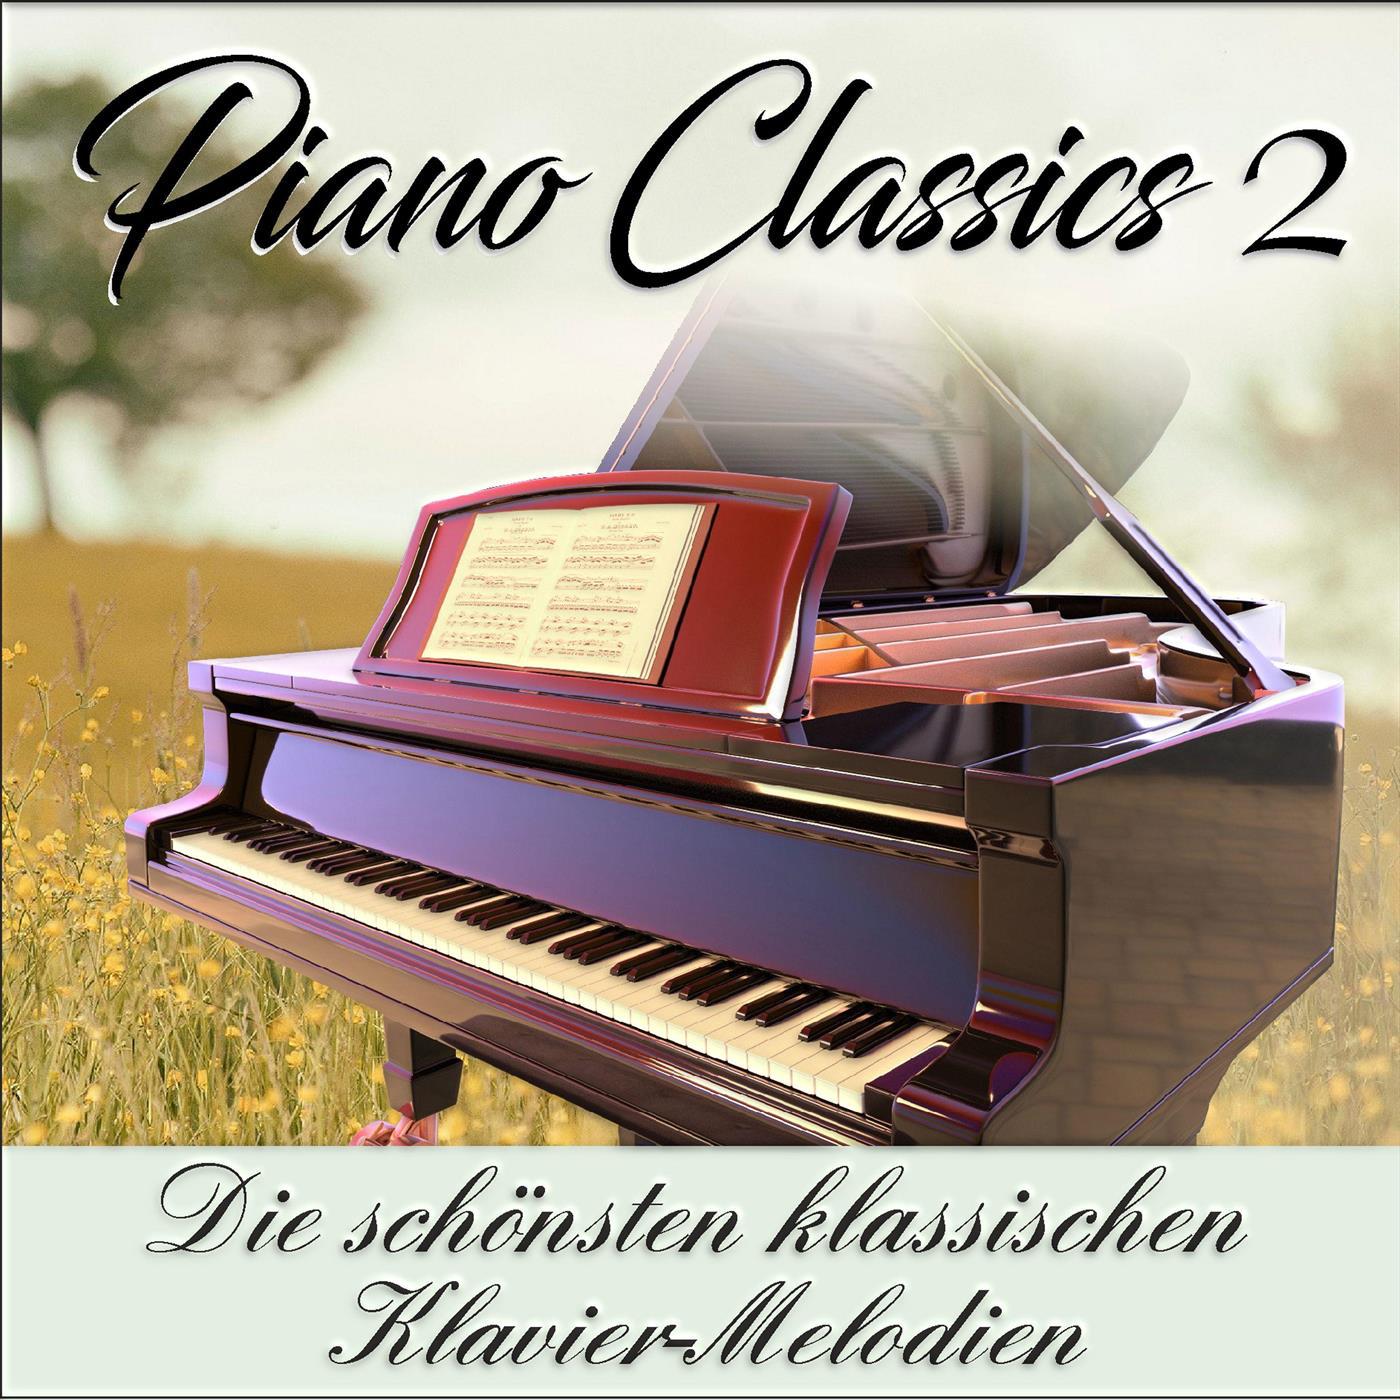 Piano Classics 2, die schönsten klassischen Klavier-Melodien